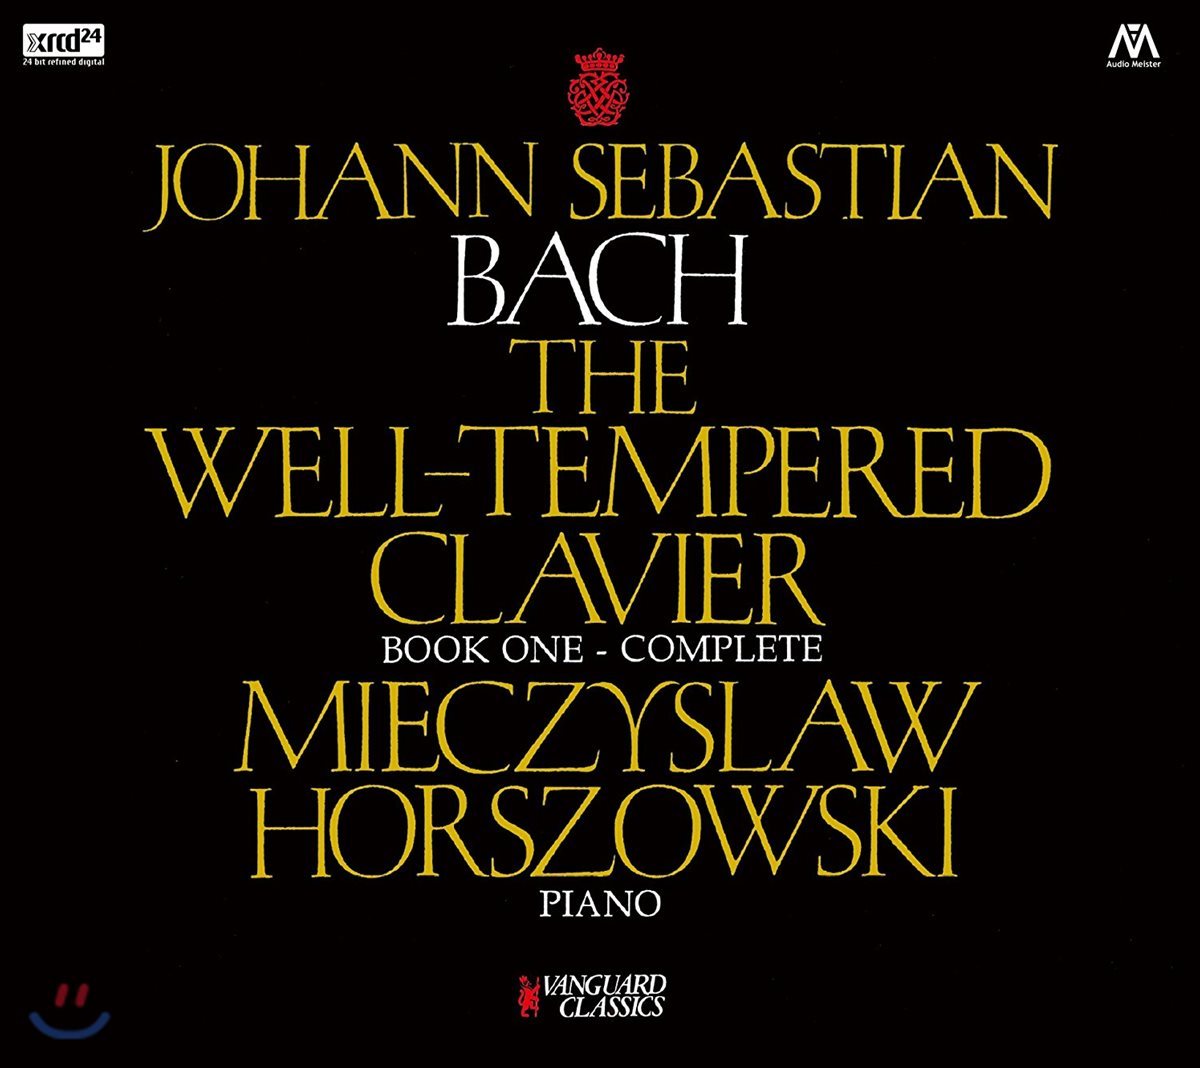 Mieczyslaw Horszowski 바흐: 평균율 클라이버 곡집 1권 (Bach: The Well-Tempered Clavier Book 1) [XRCD]